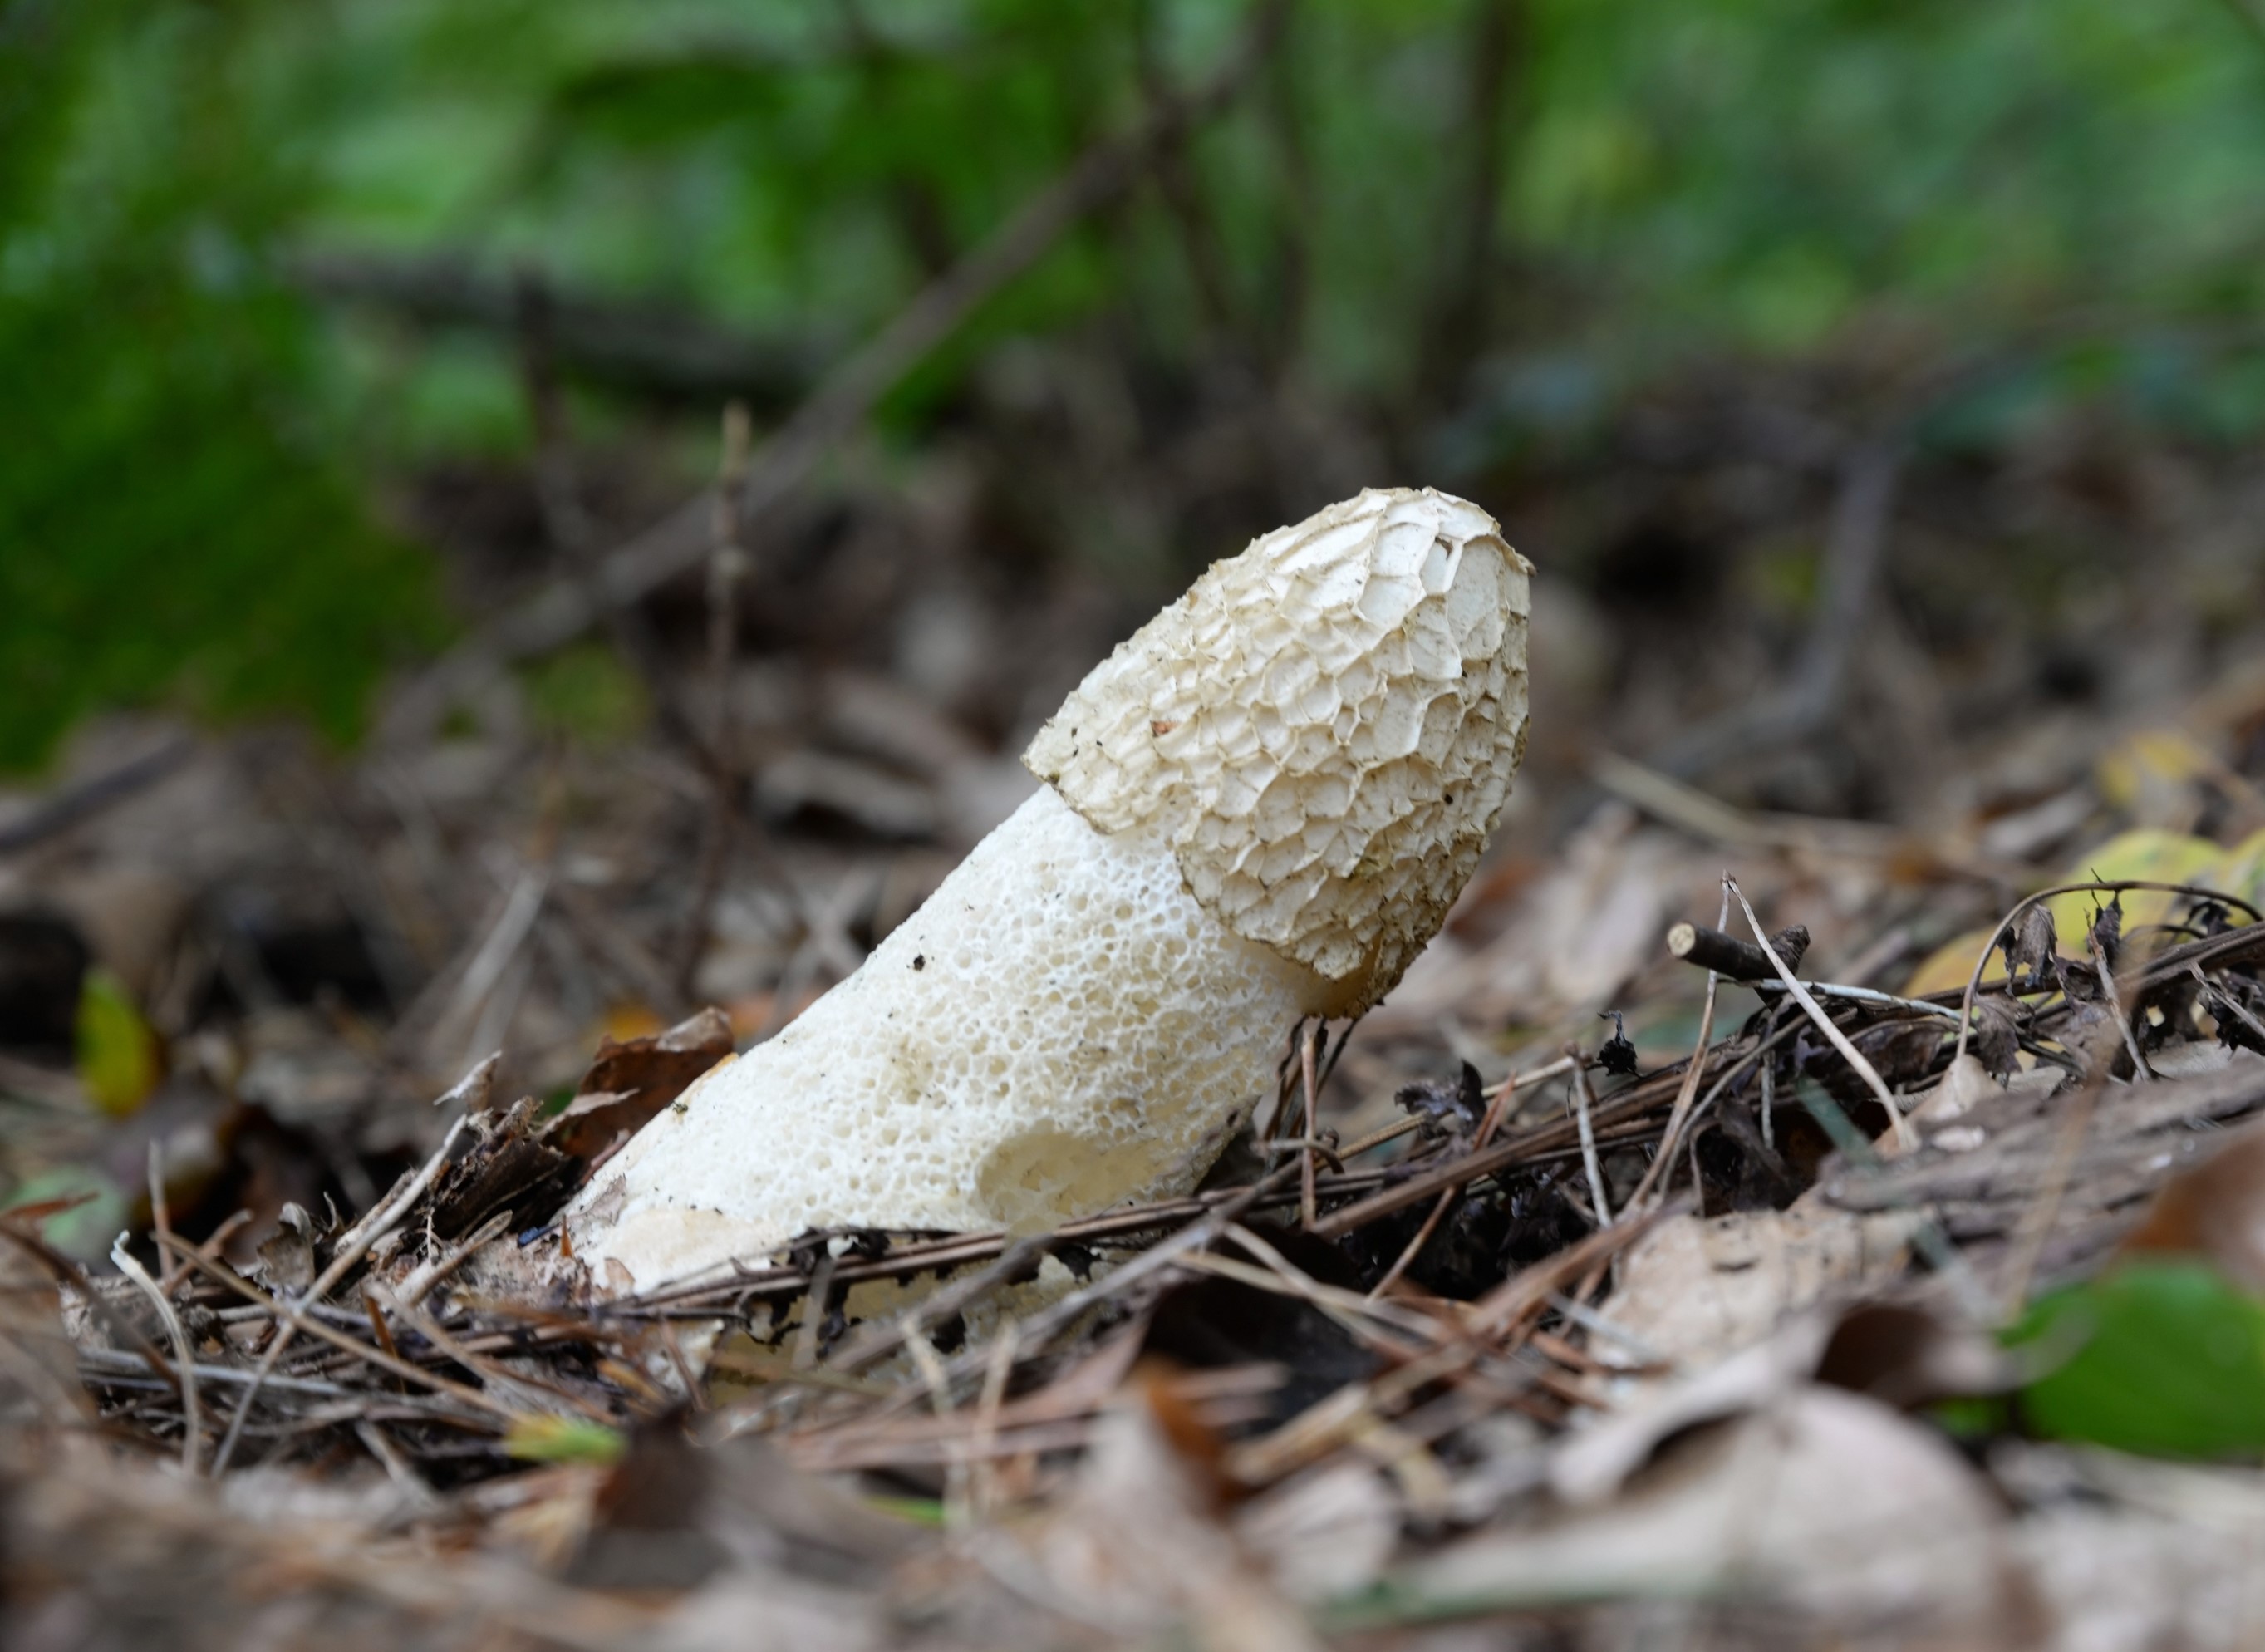 Common stinkhorn fungus on forest floor